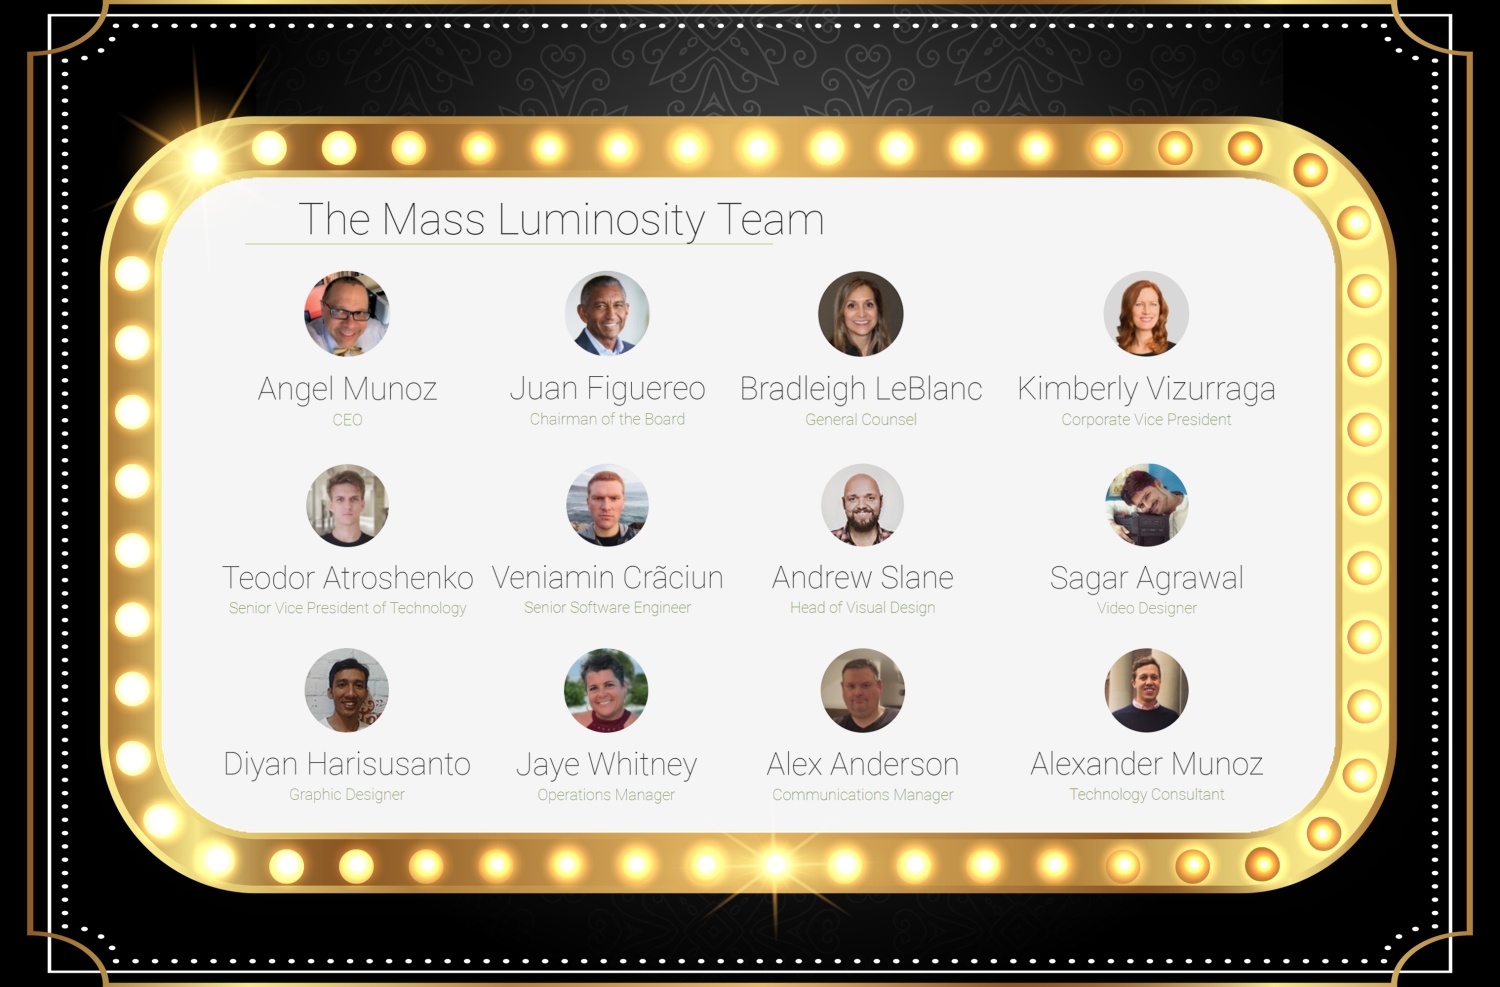 The Mass Lumimosity Team